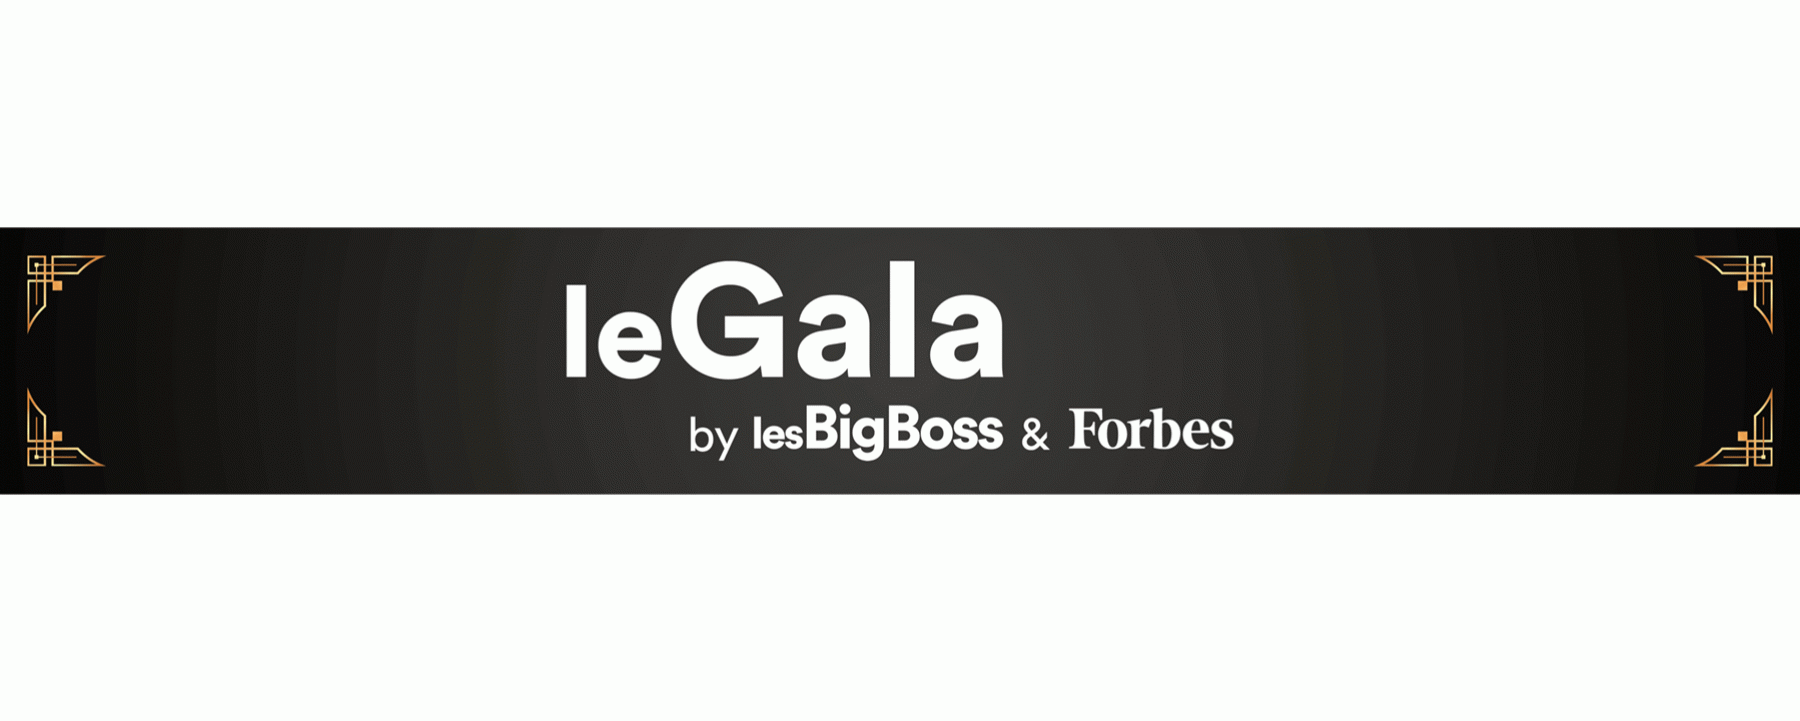 Le Gala by LesBigBoss et Forbes le 23 novembre 2021